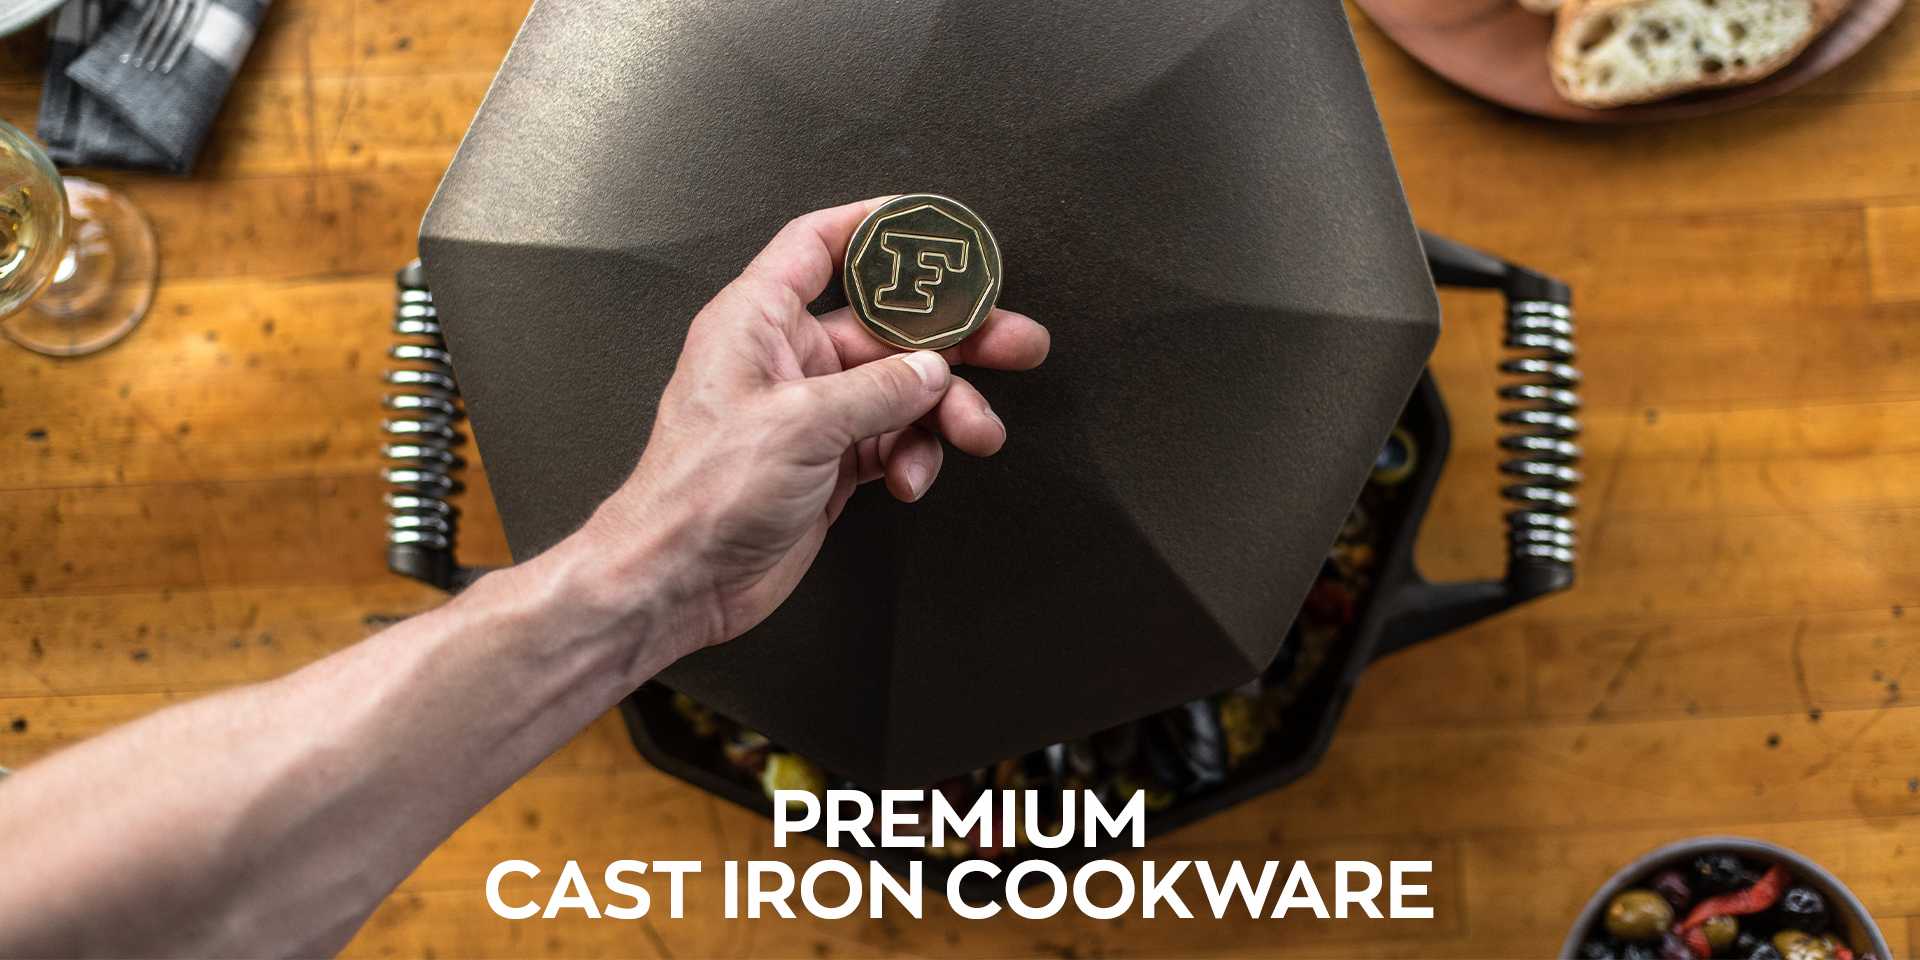 Finex Premium Cast Iron Cookware